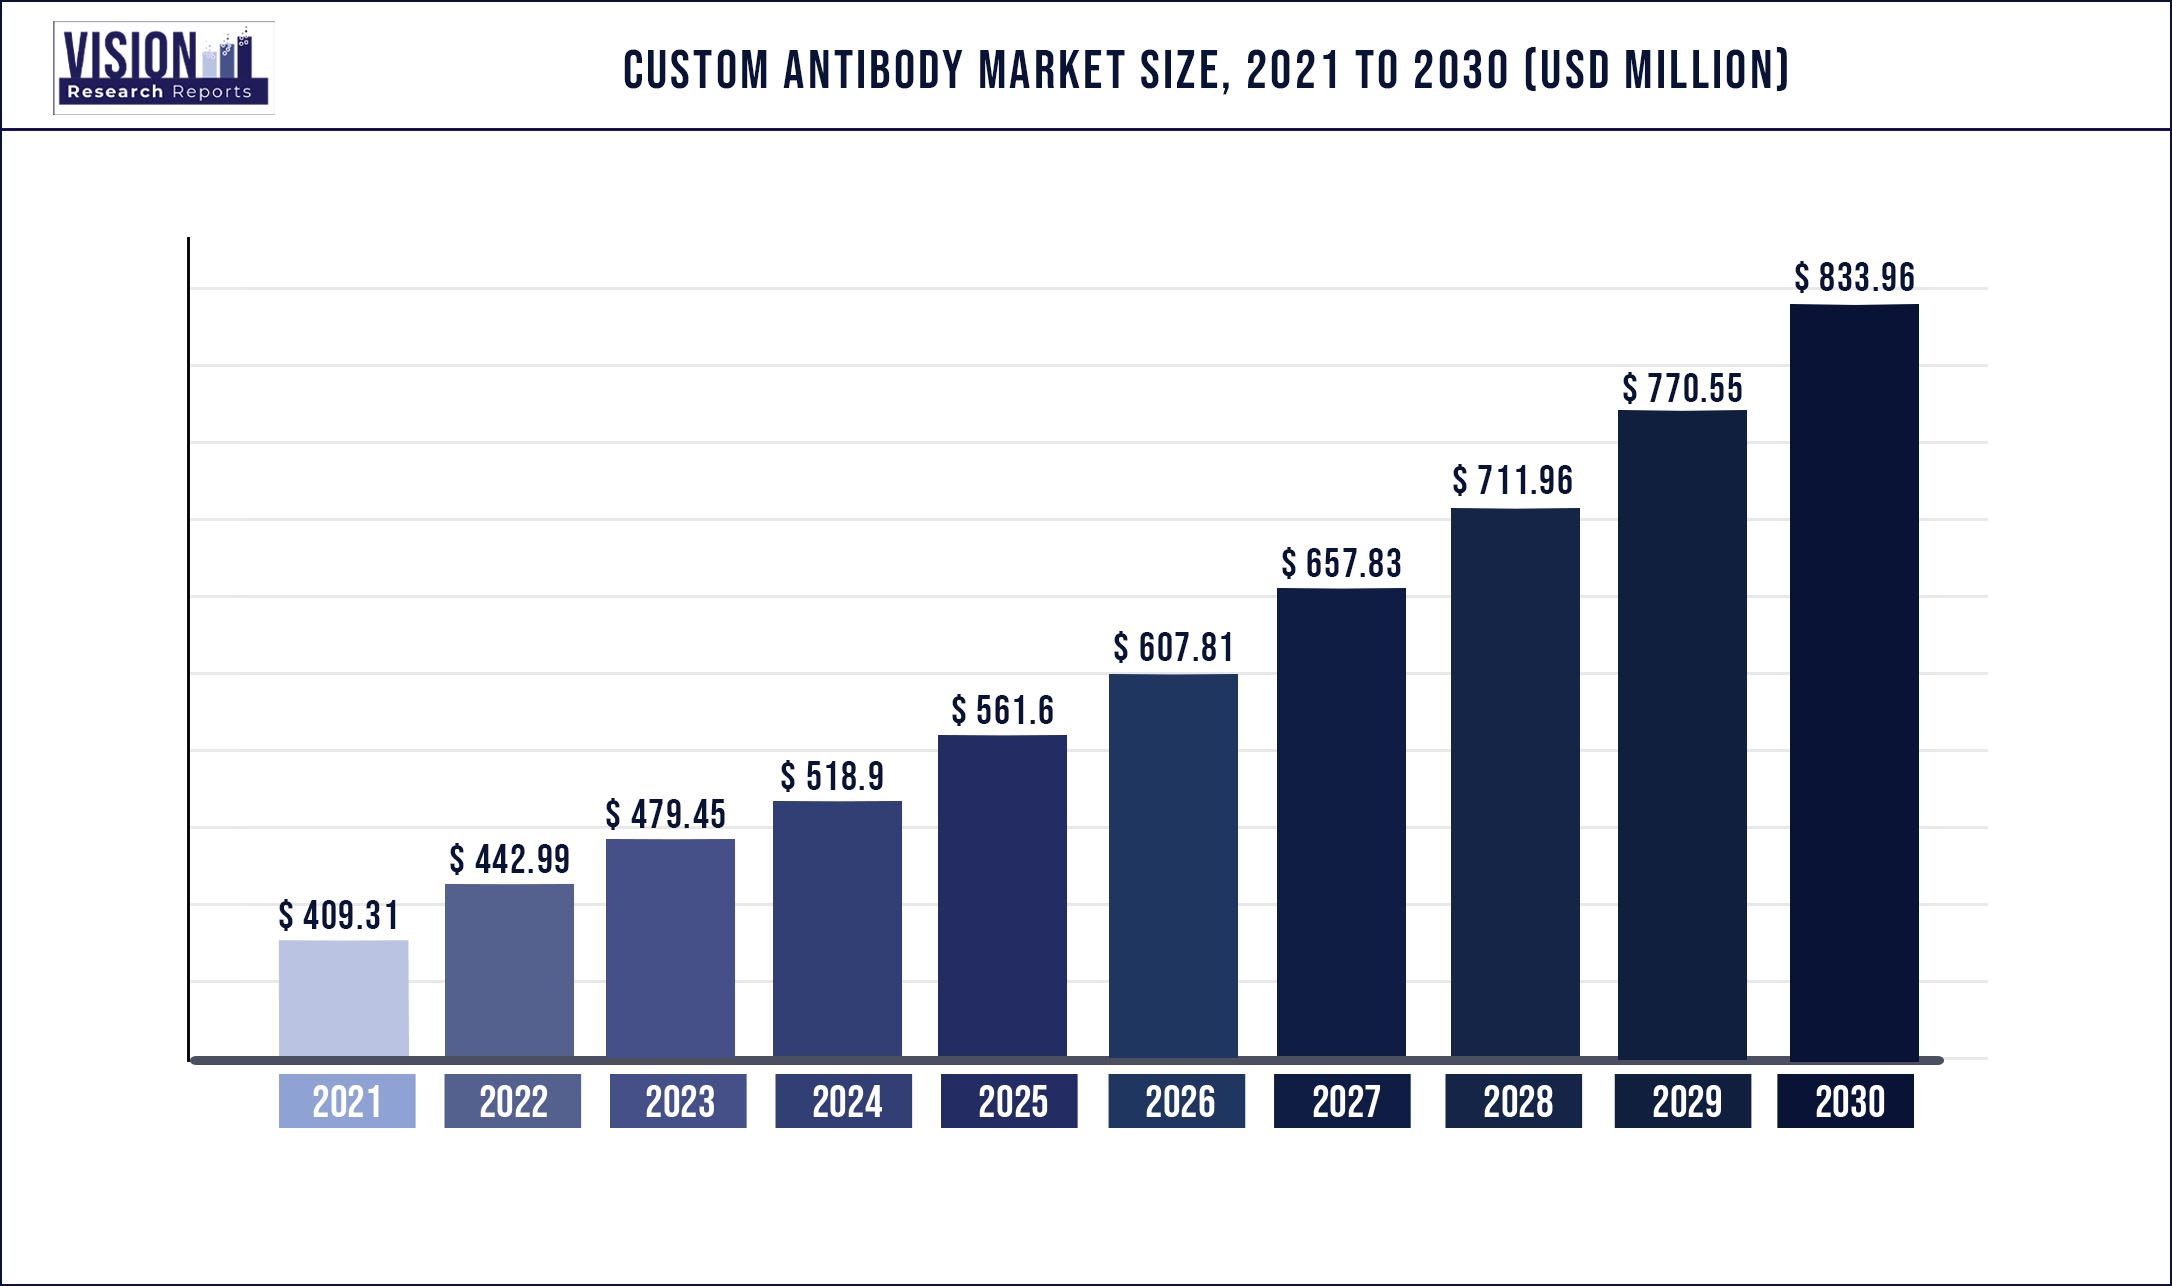 Custom Antibody Market Size 2021 to 2030